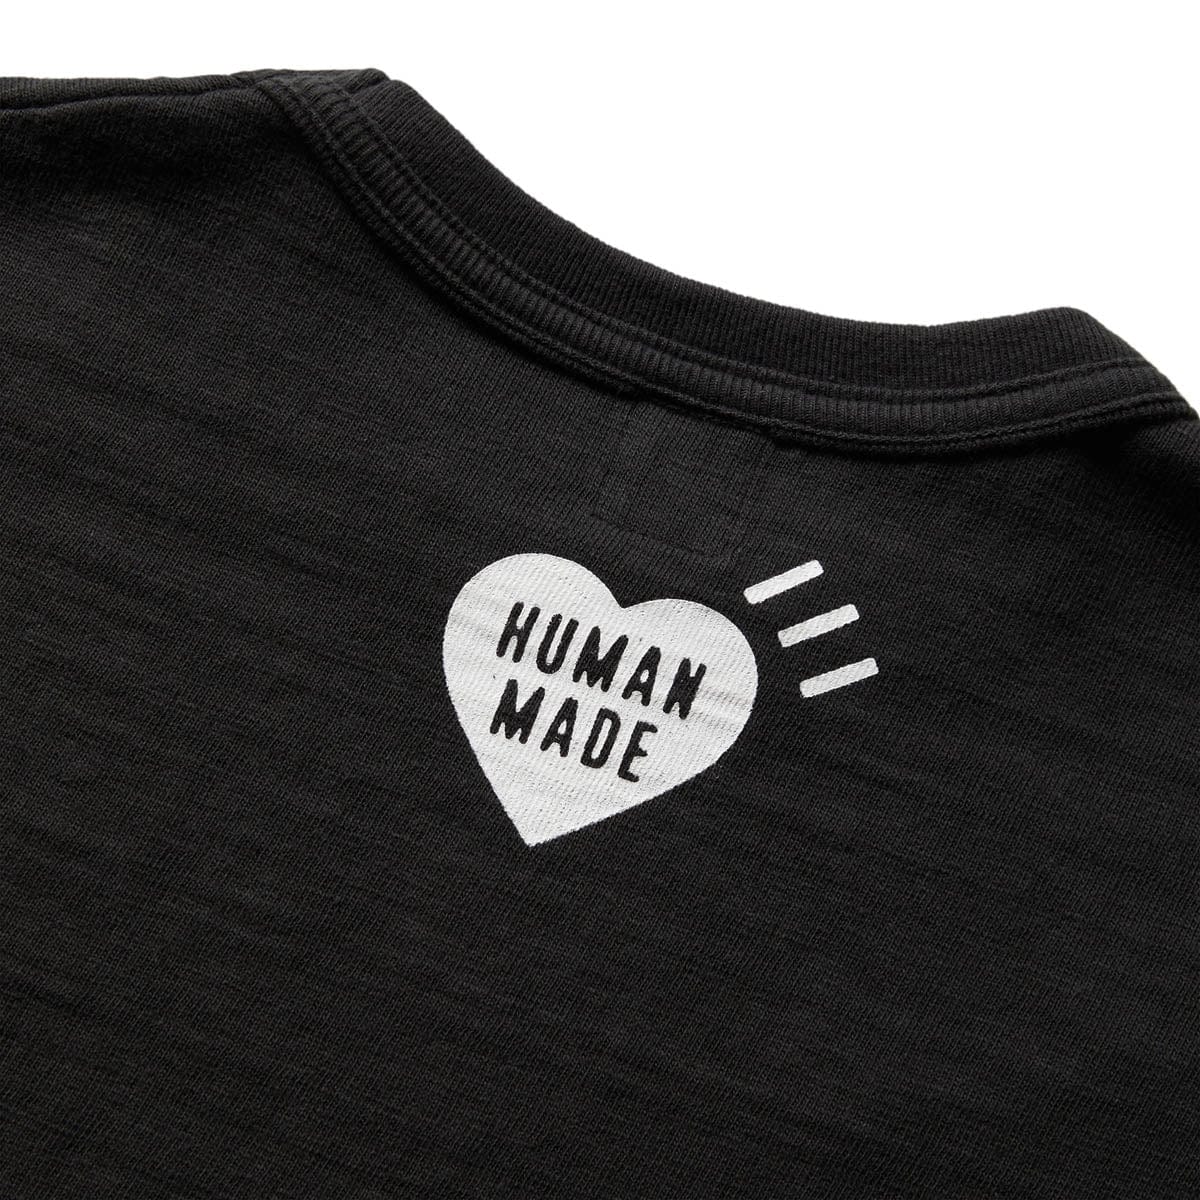 Shop HUMAN MADE 2023 SS T-Shirts by market.jp